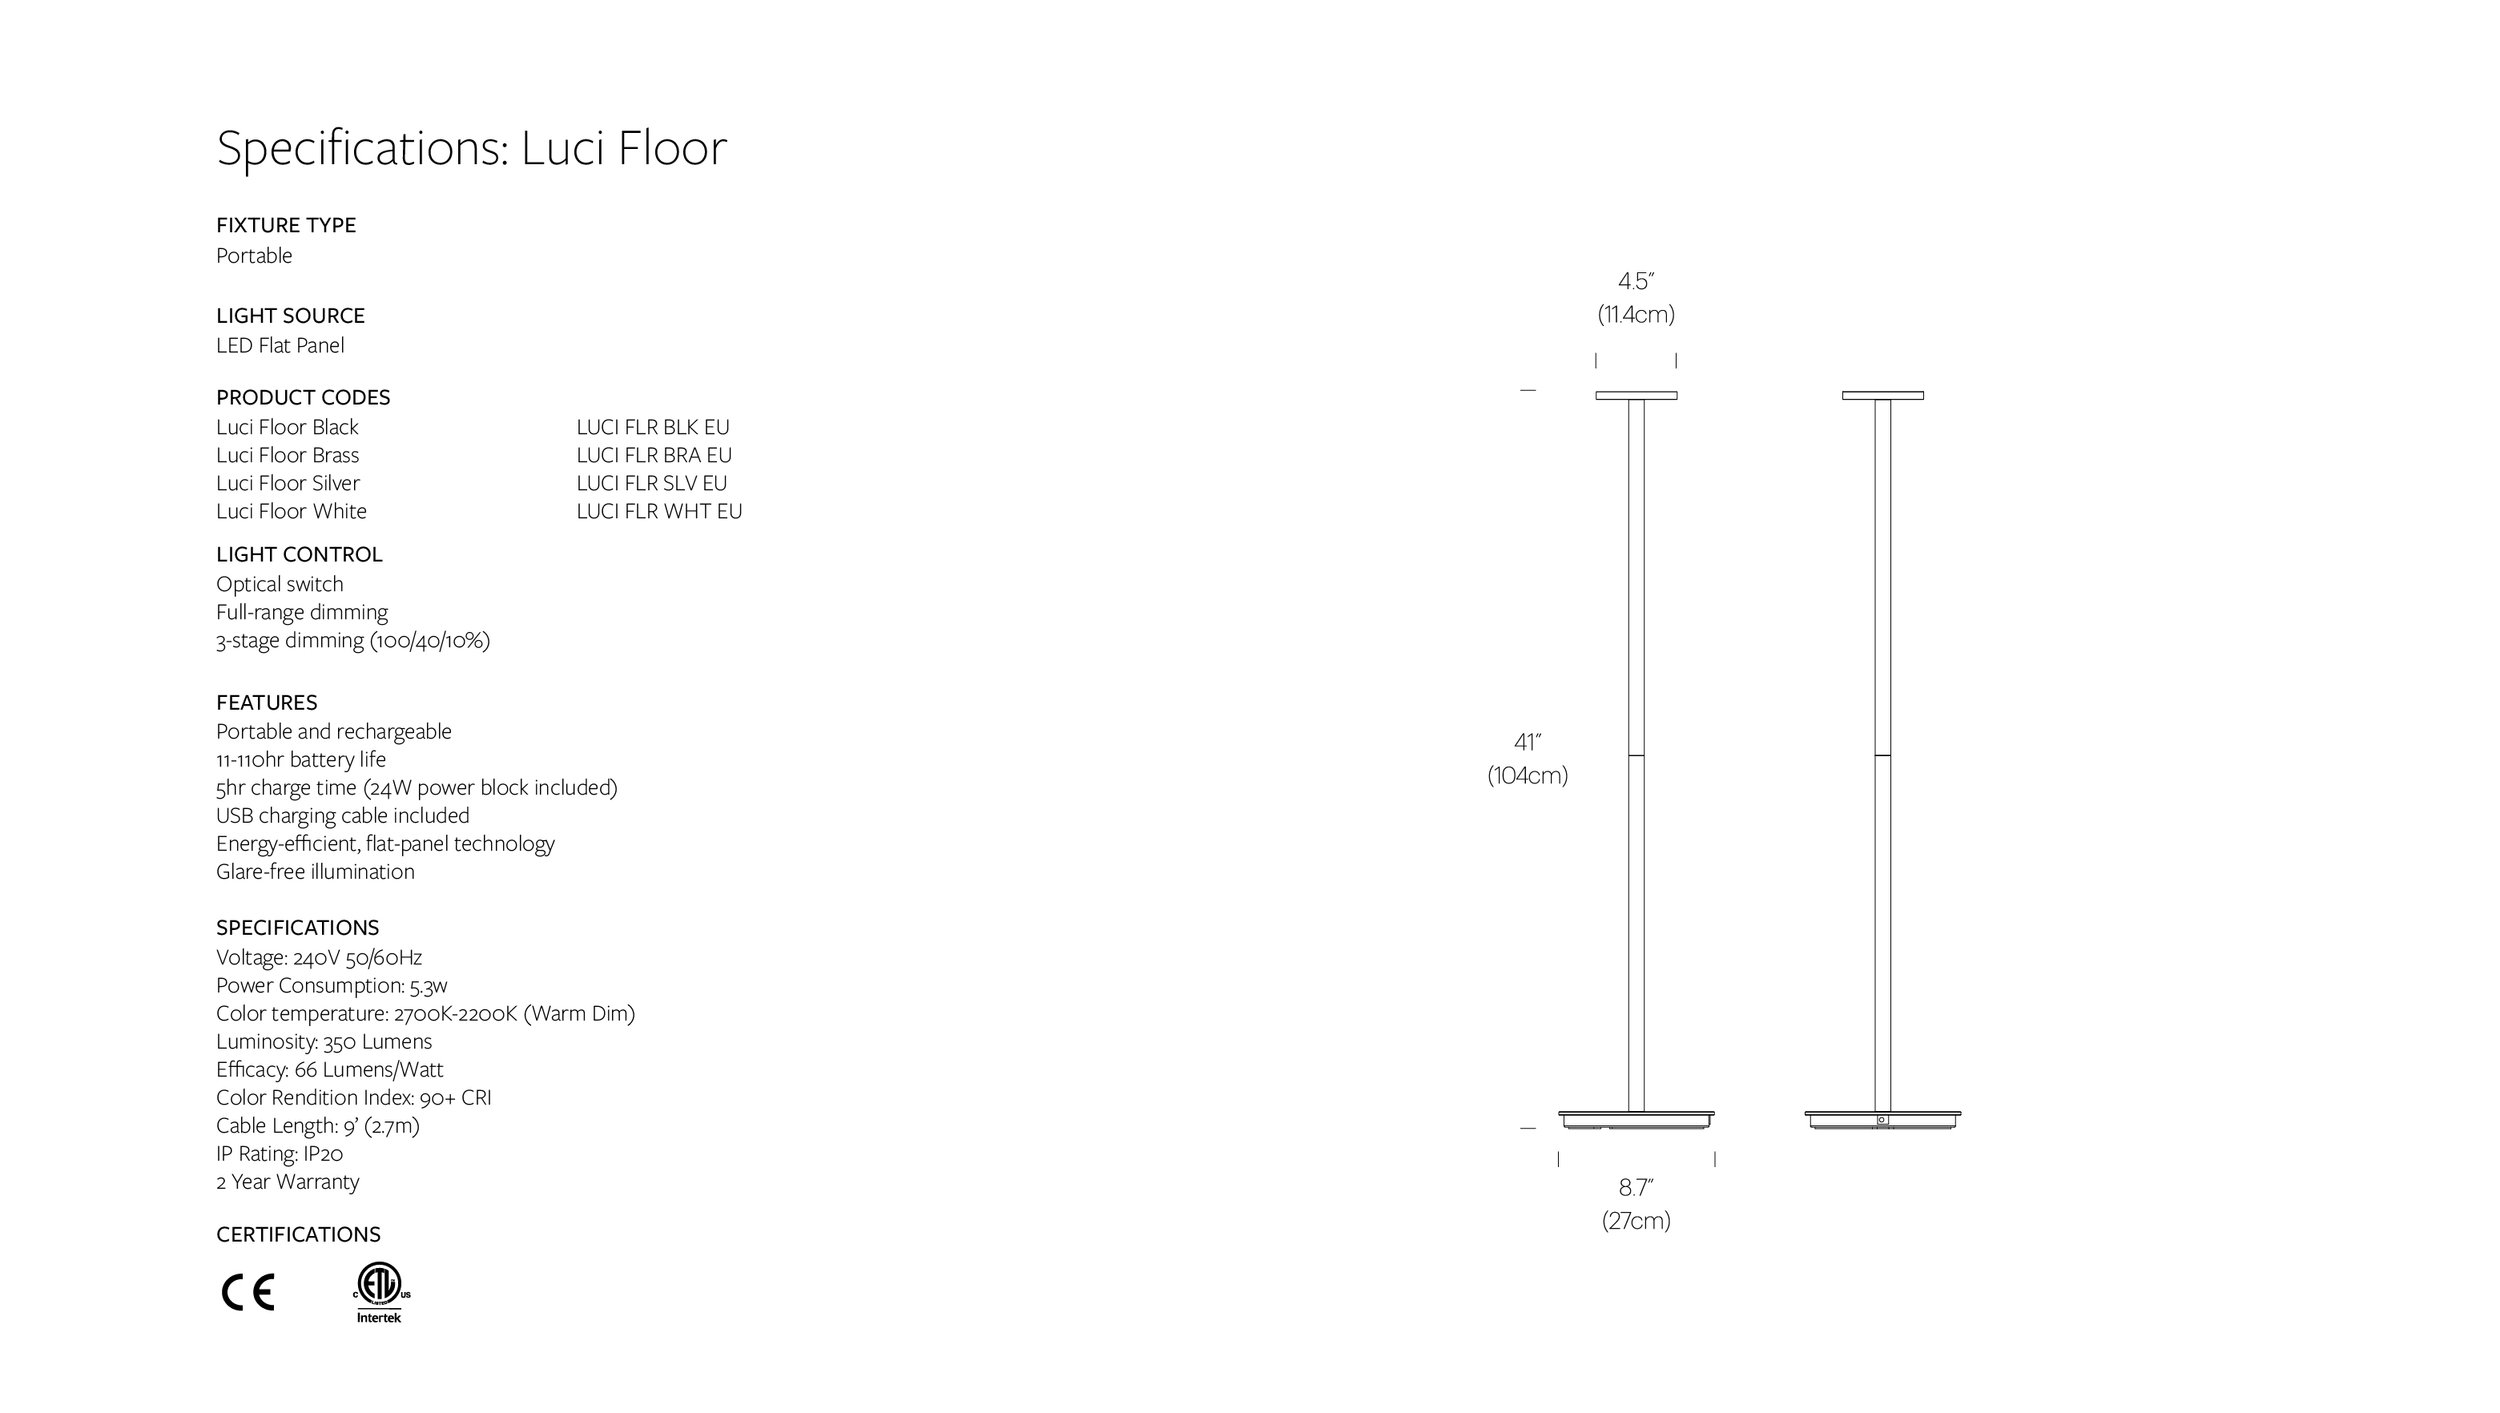 Pablo+Designs+Luci Table and Floor+EU+Spec+Sheet 030122 V2-22.jpg